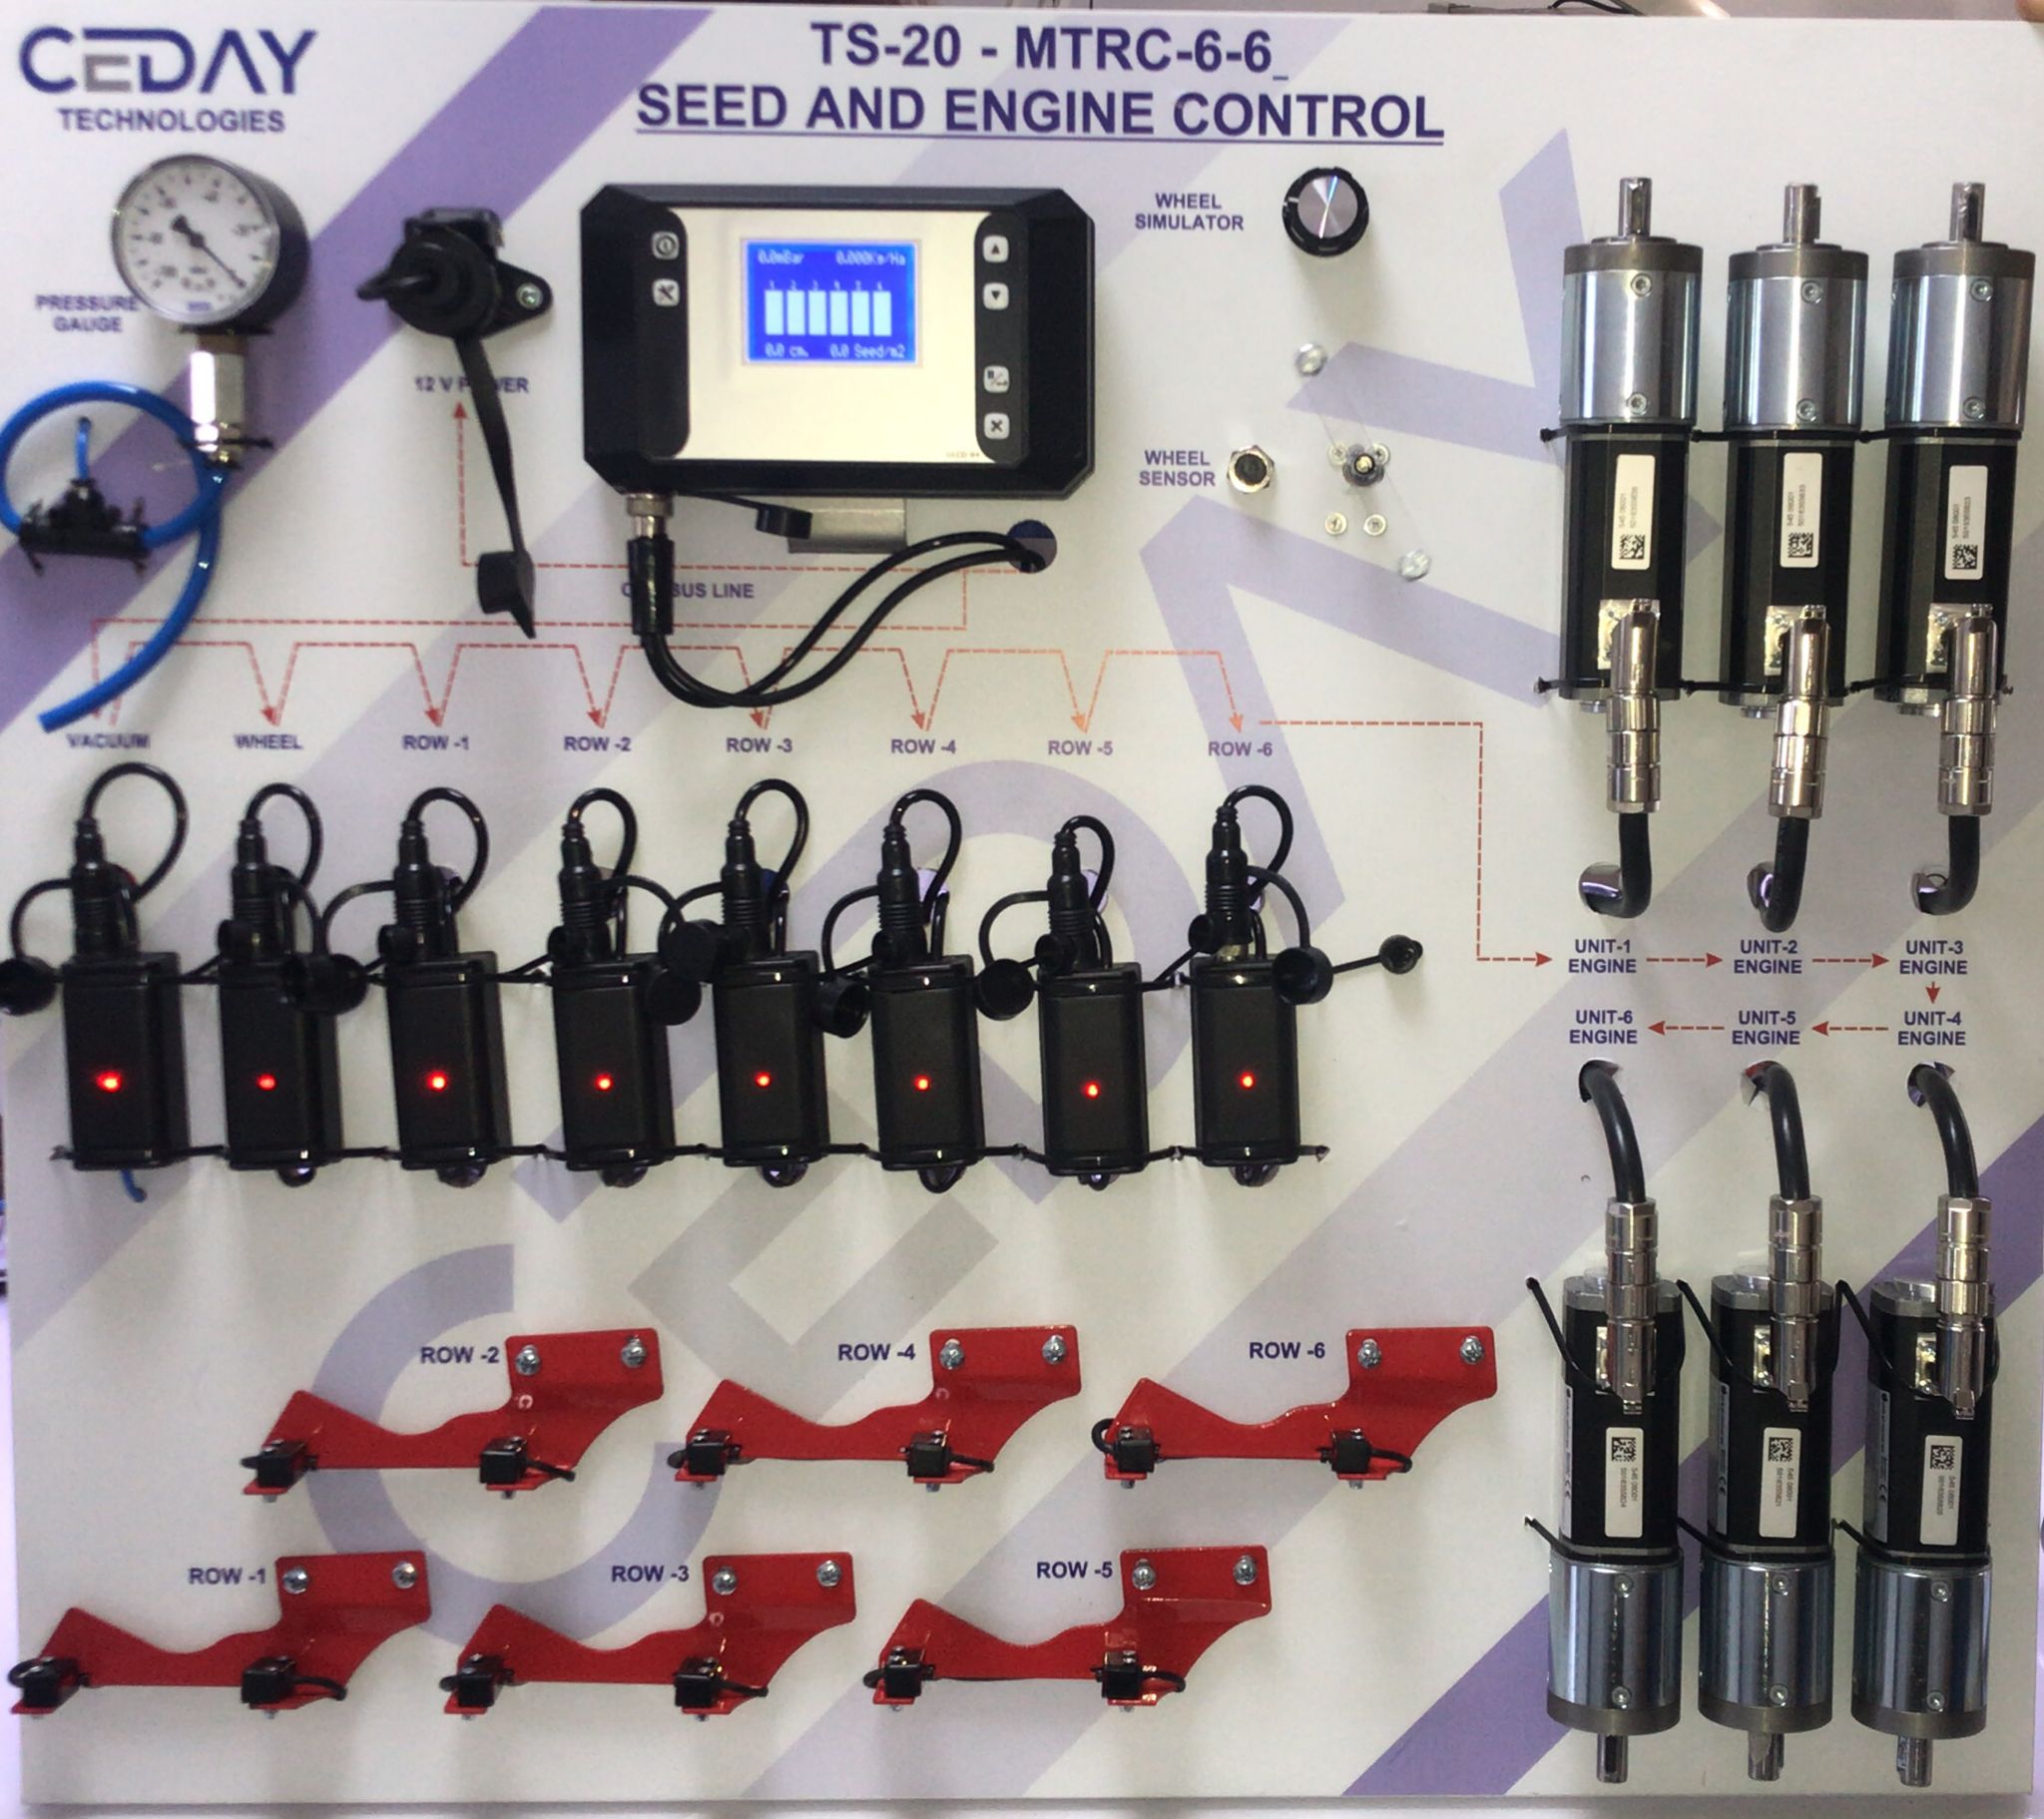 Precision Seeding - TS-20 MTRC MOTORIZED SEEDING CONTROL ELECTRONICS